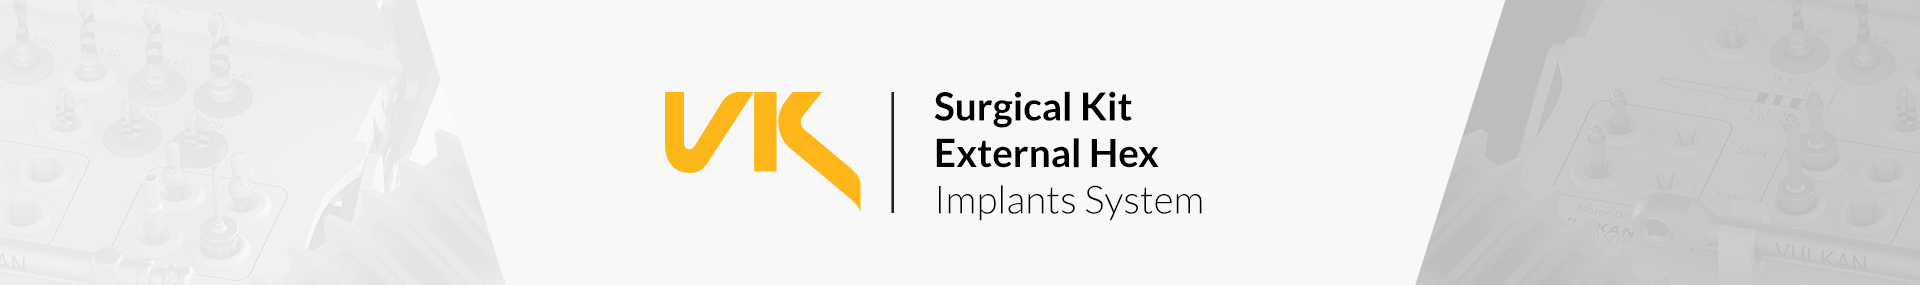 Banner Surgical Kit Header External Hex.